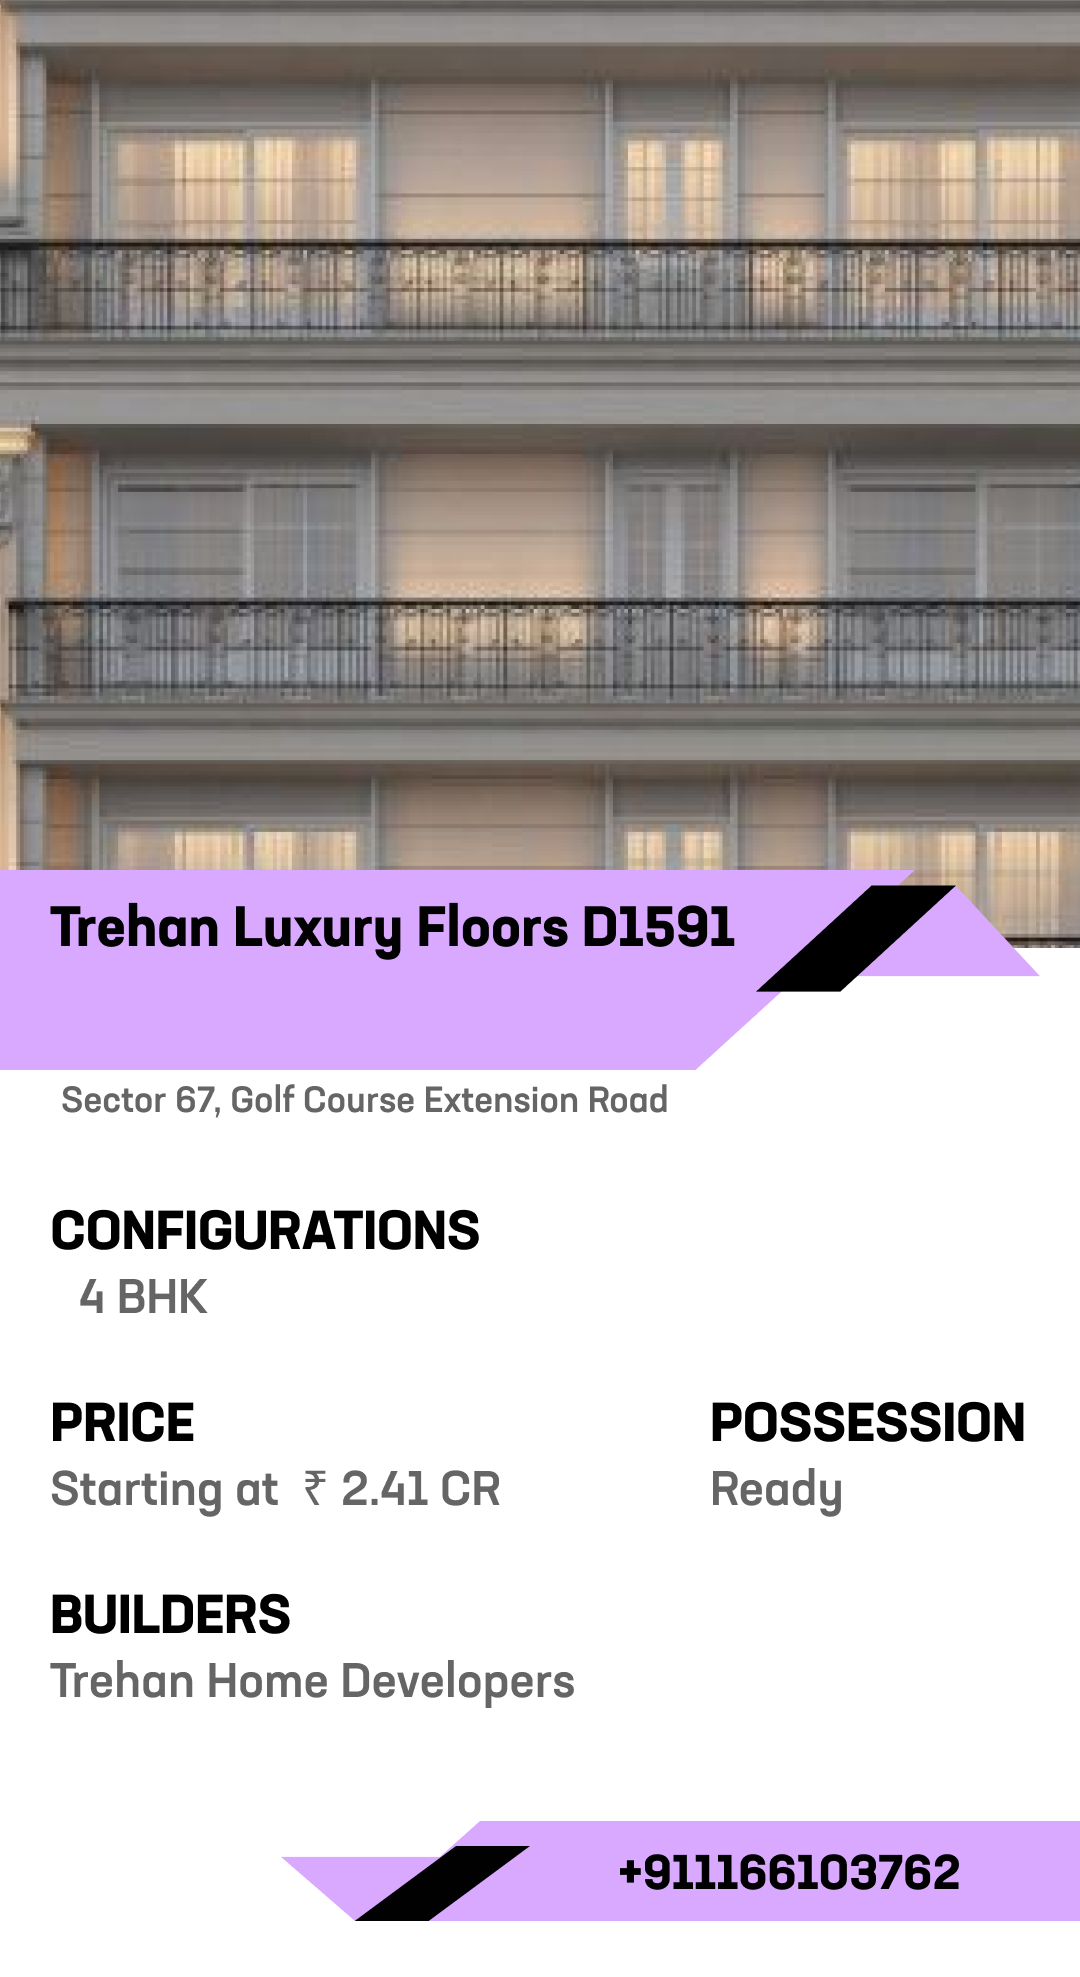 Trehan Luxury Floors D1591